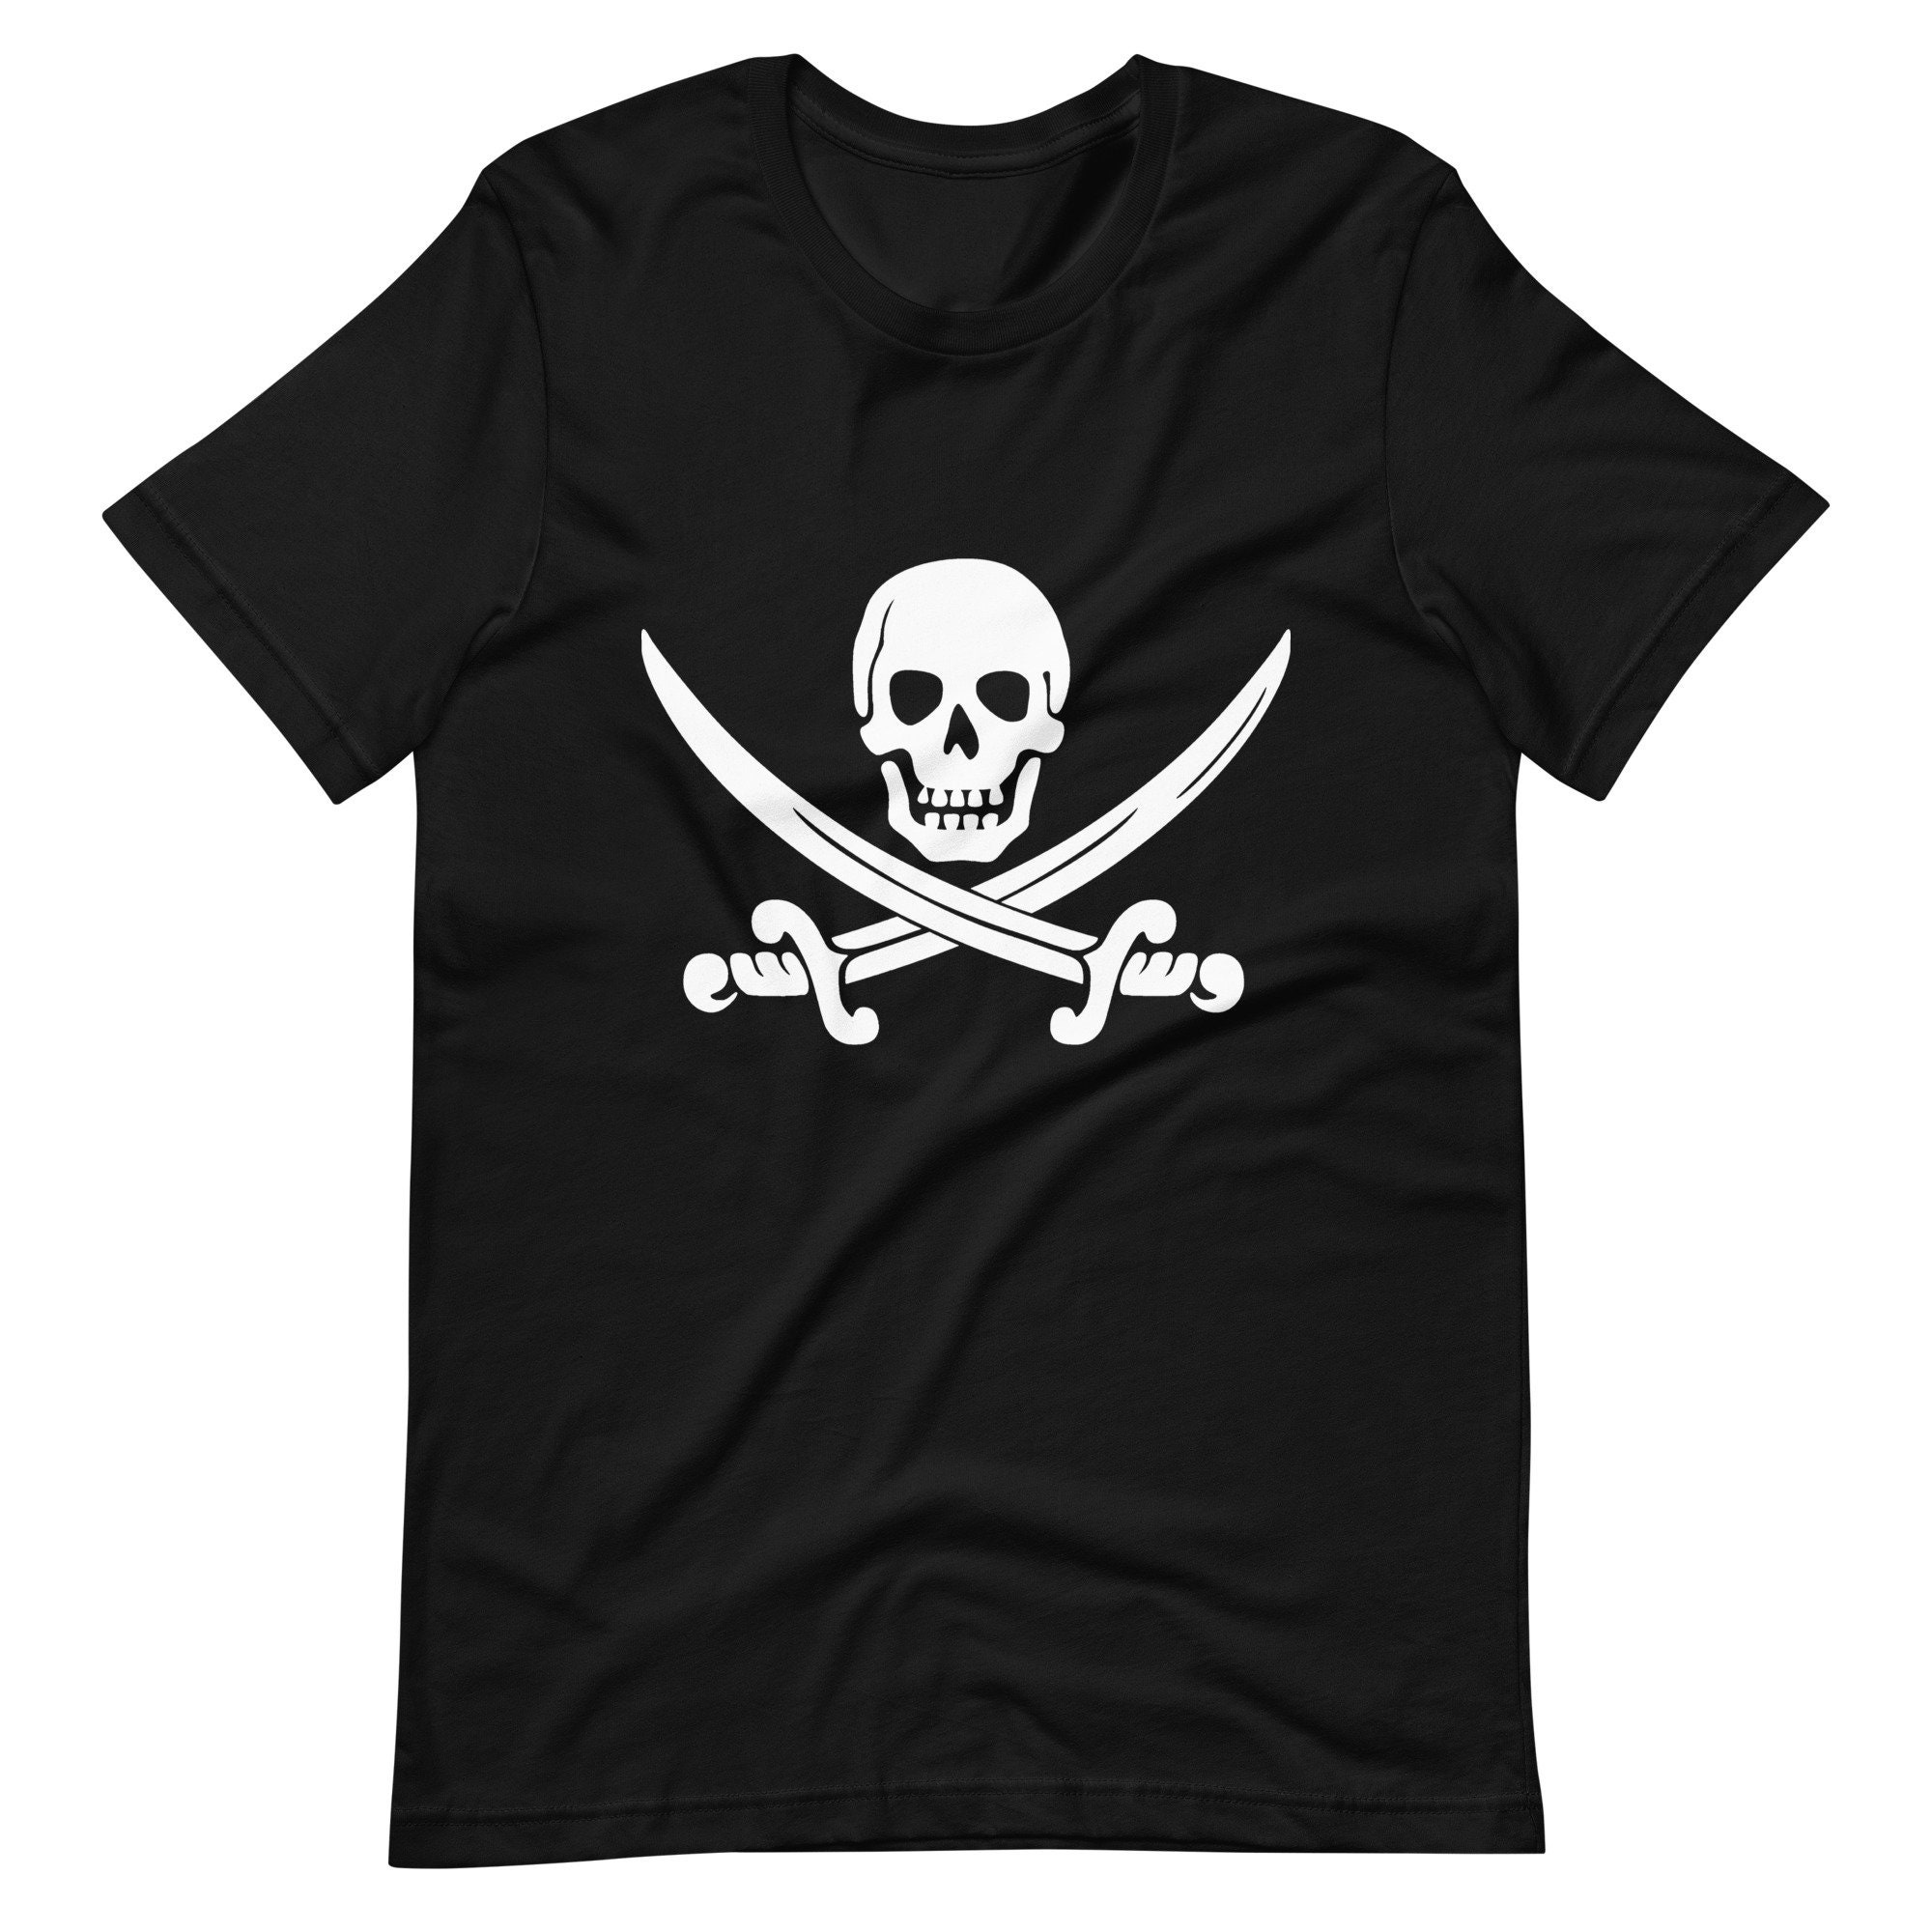 One Piece - Damen T-Shirt - Totenkopf / Skull - Schwarz Gr. S